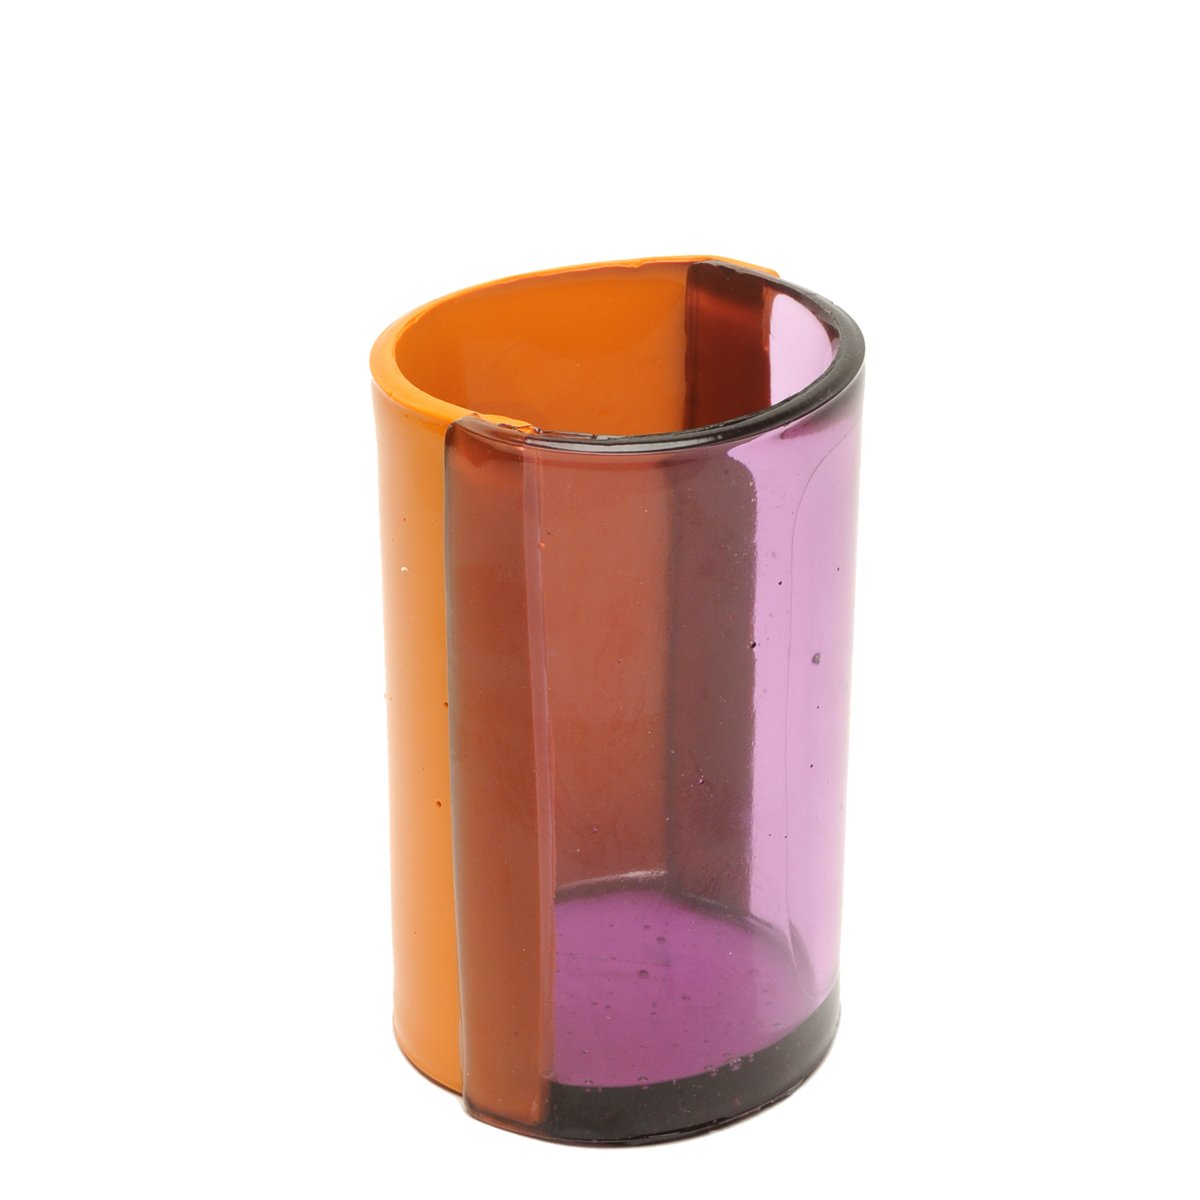 Enzo Mari Soft Resin Vase Small - Orange and Purple